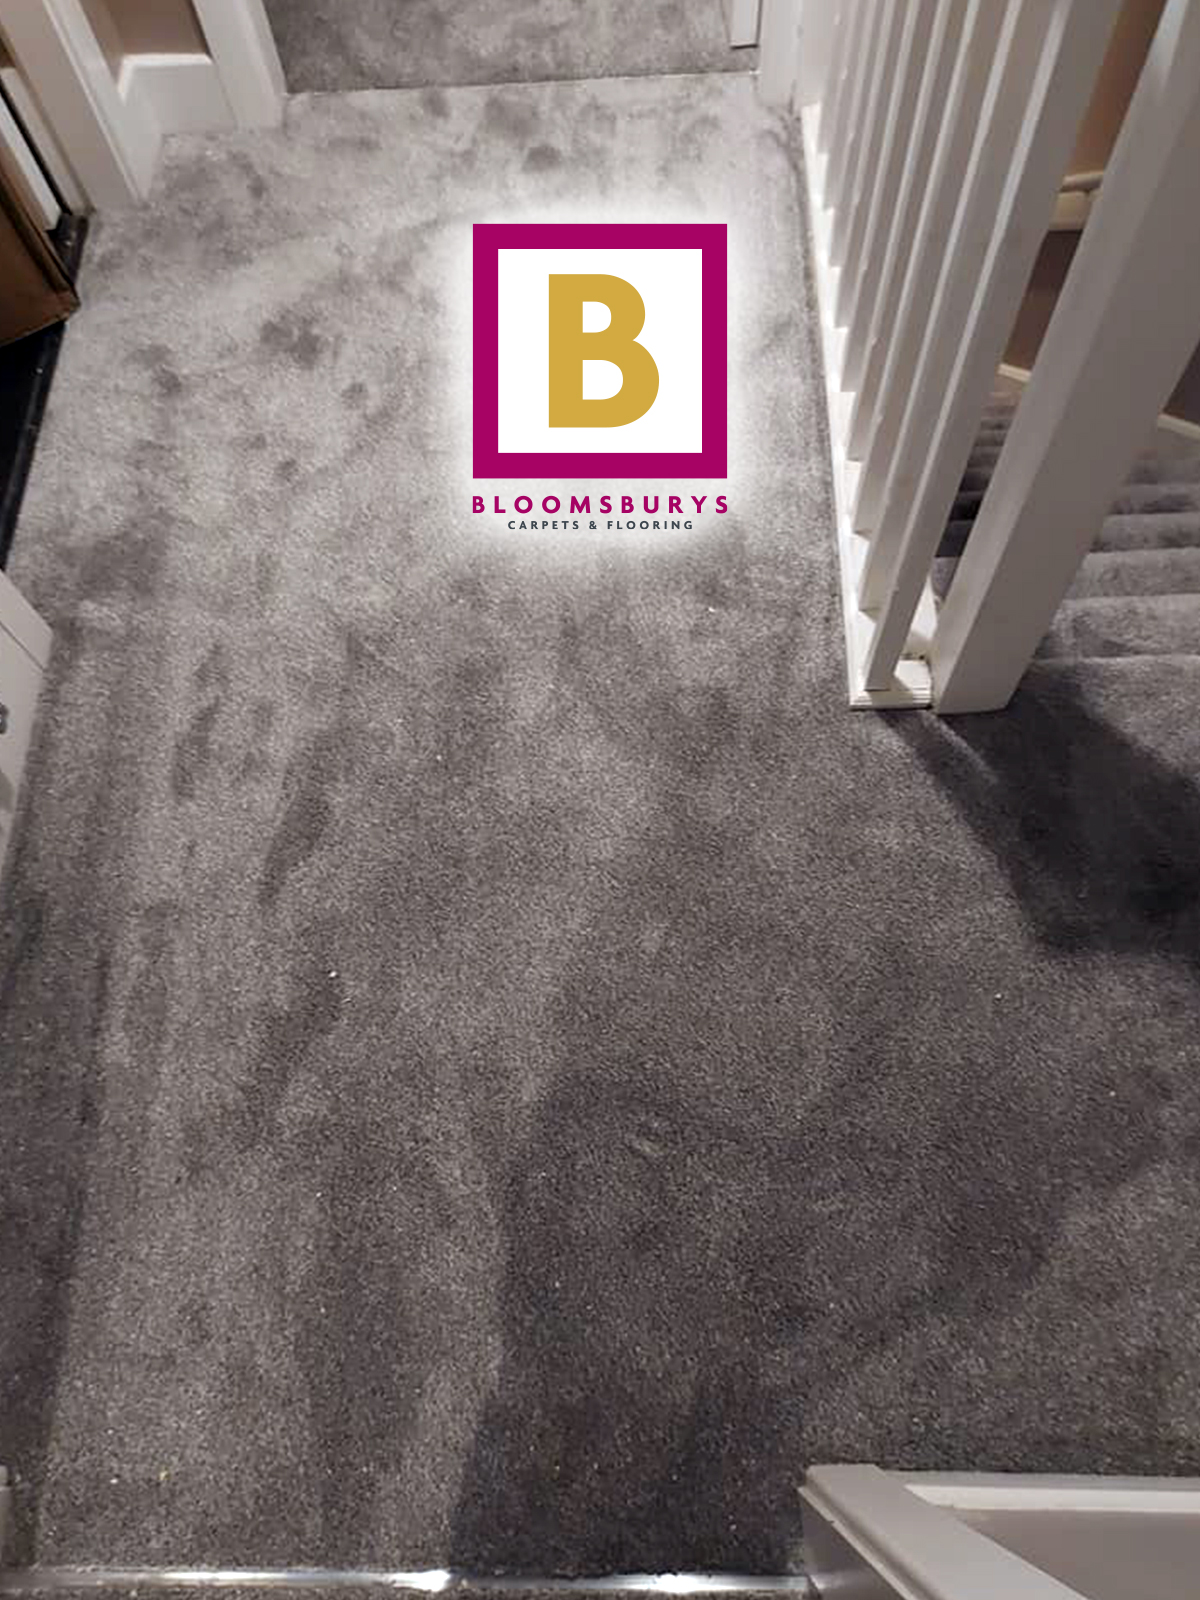 Super & Supreme Saxony Stain Resistant Carpets